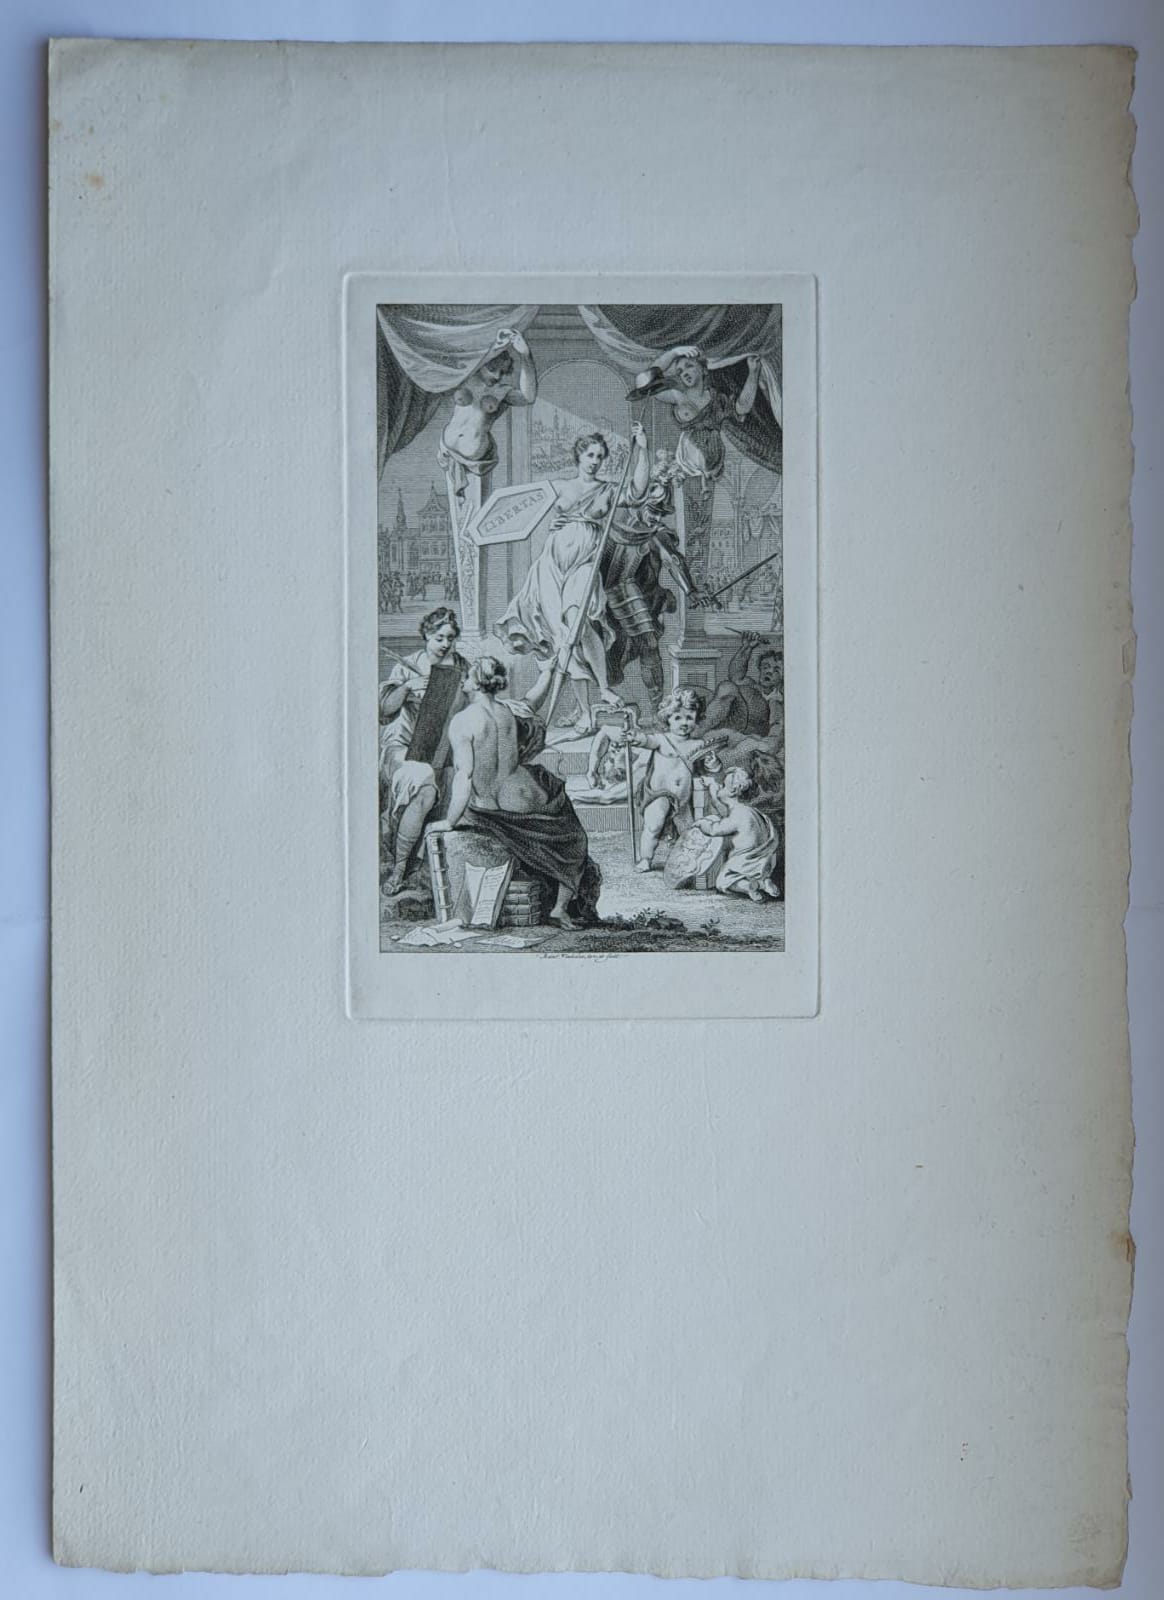 [Antique title page, 1790] Allegorical composition, published 1790, 1 p.